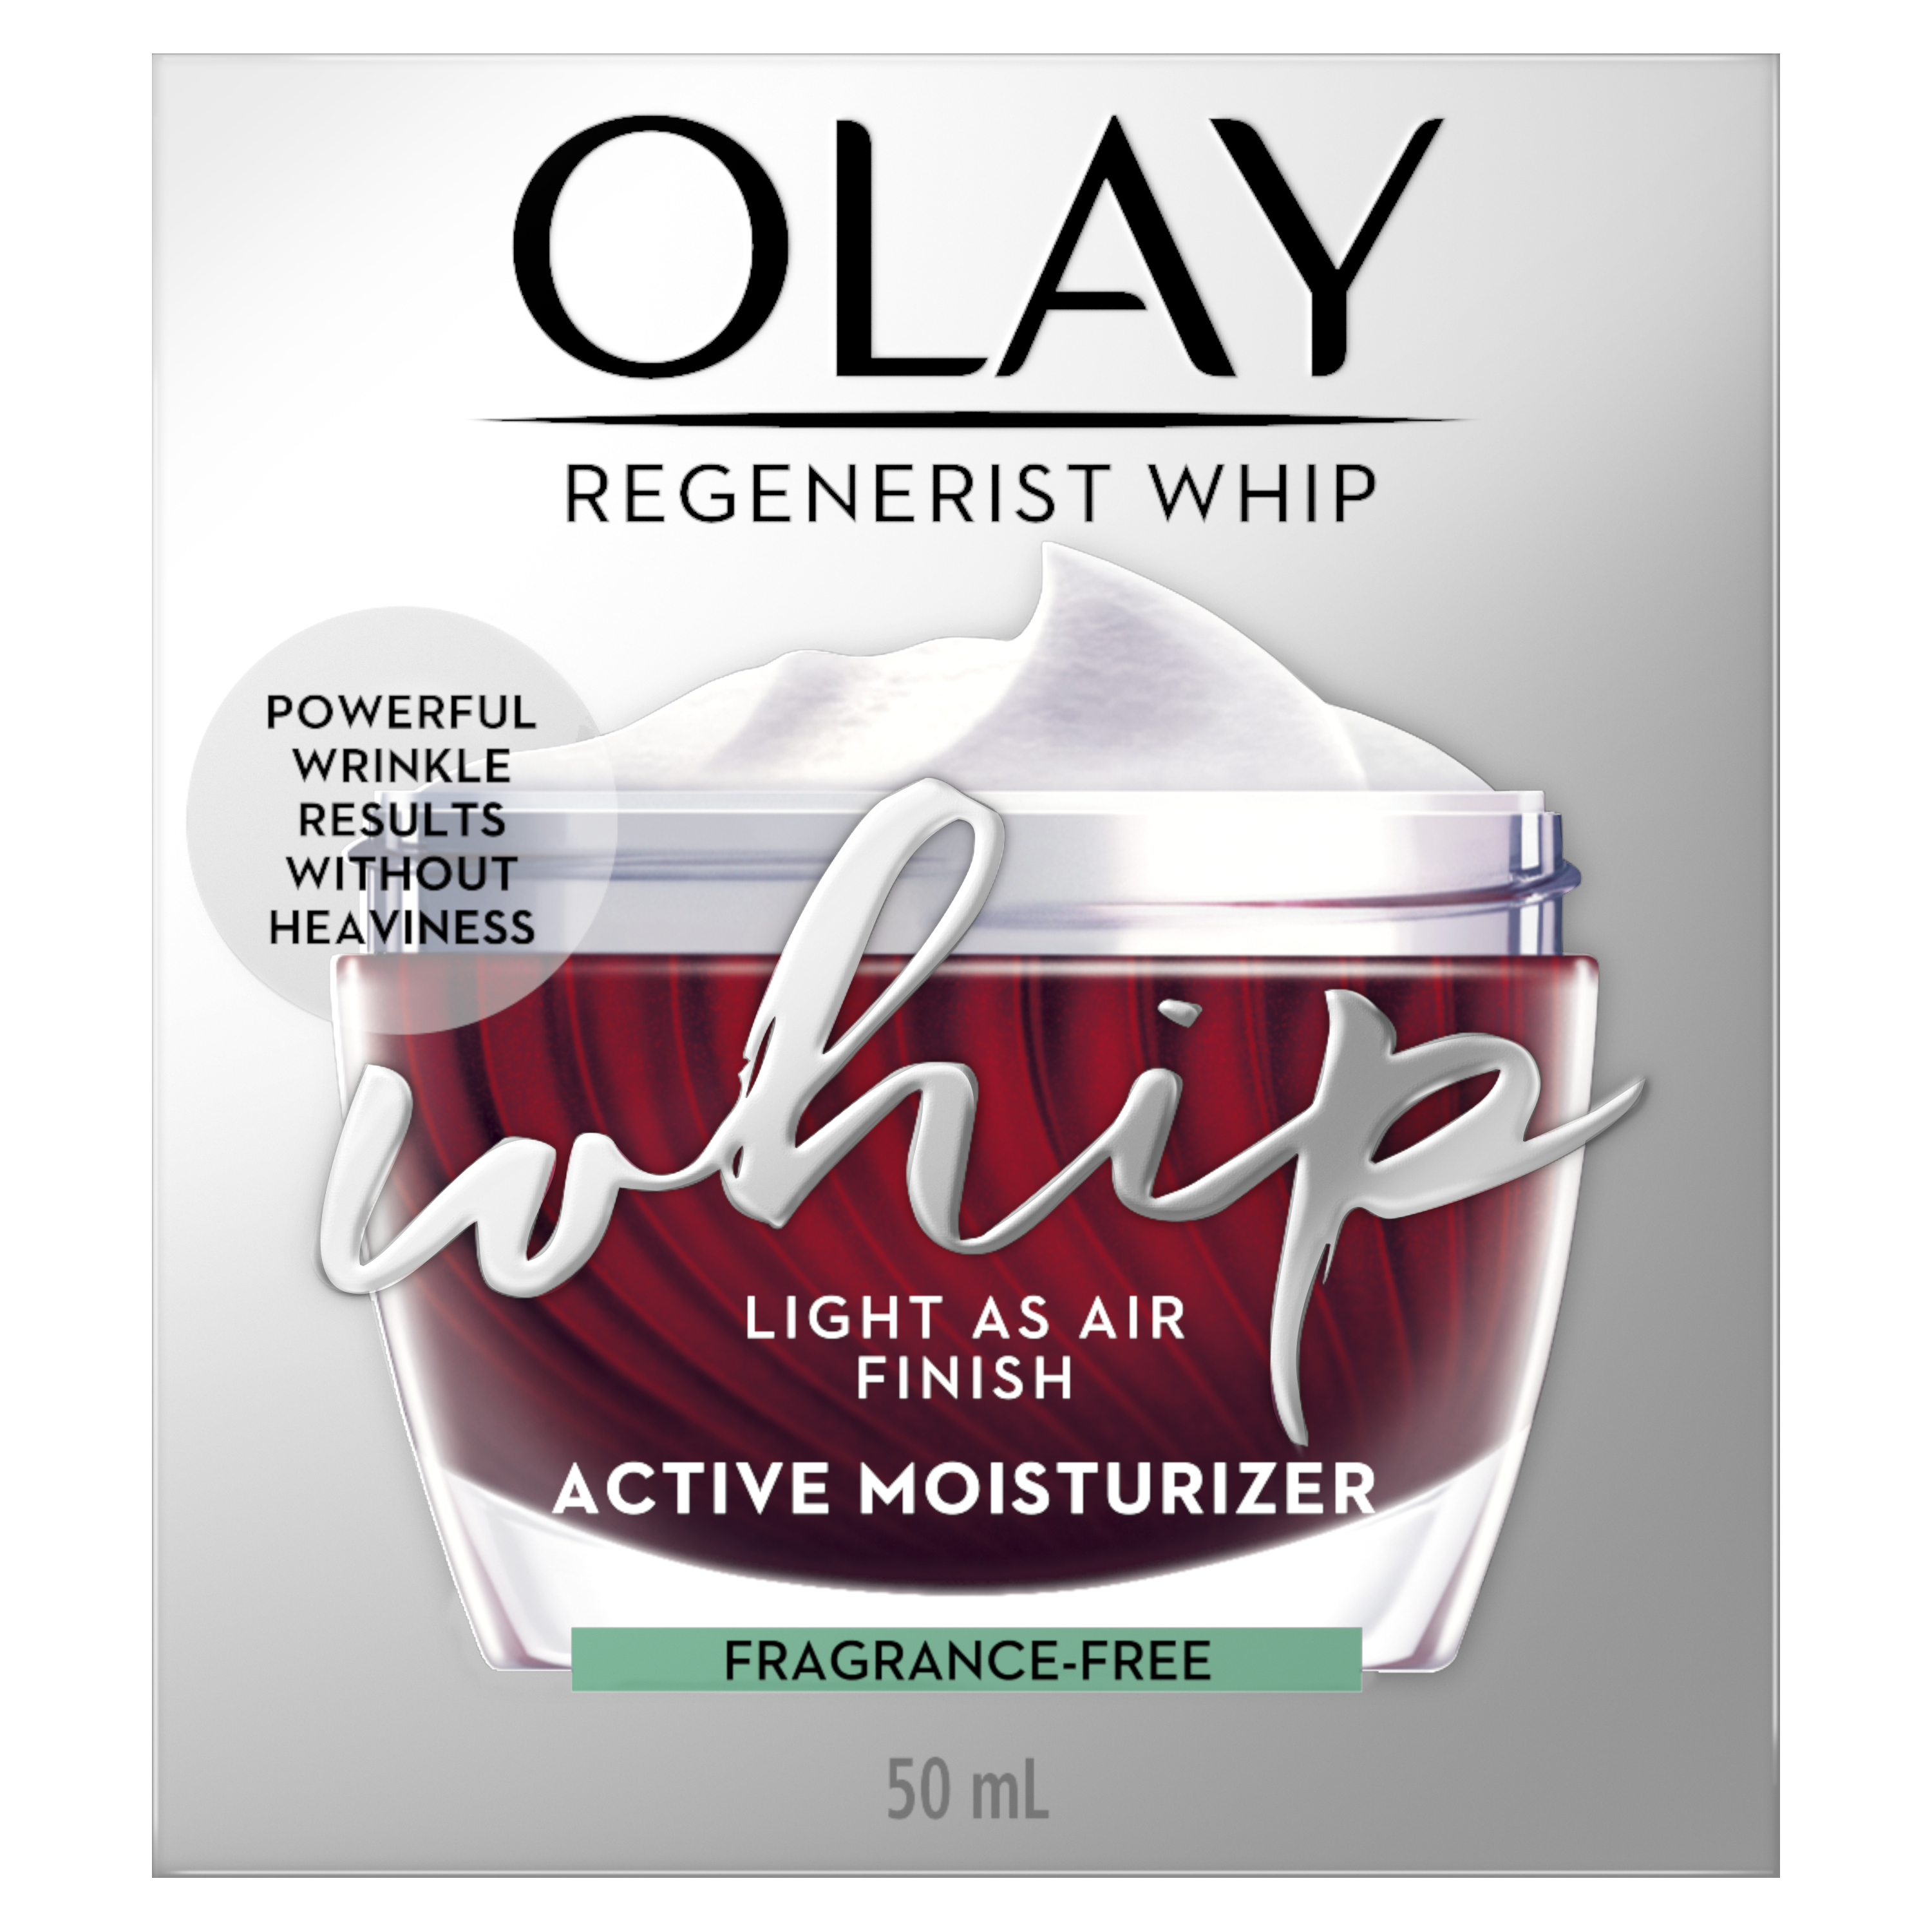 Olay Regenerist Whip Face Moisturizer Fragrance-Free 50 ml